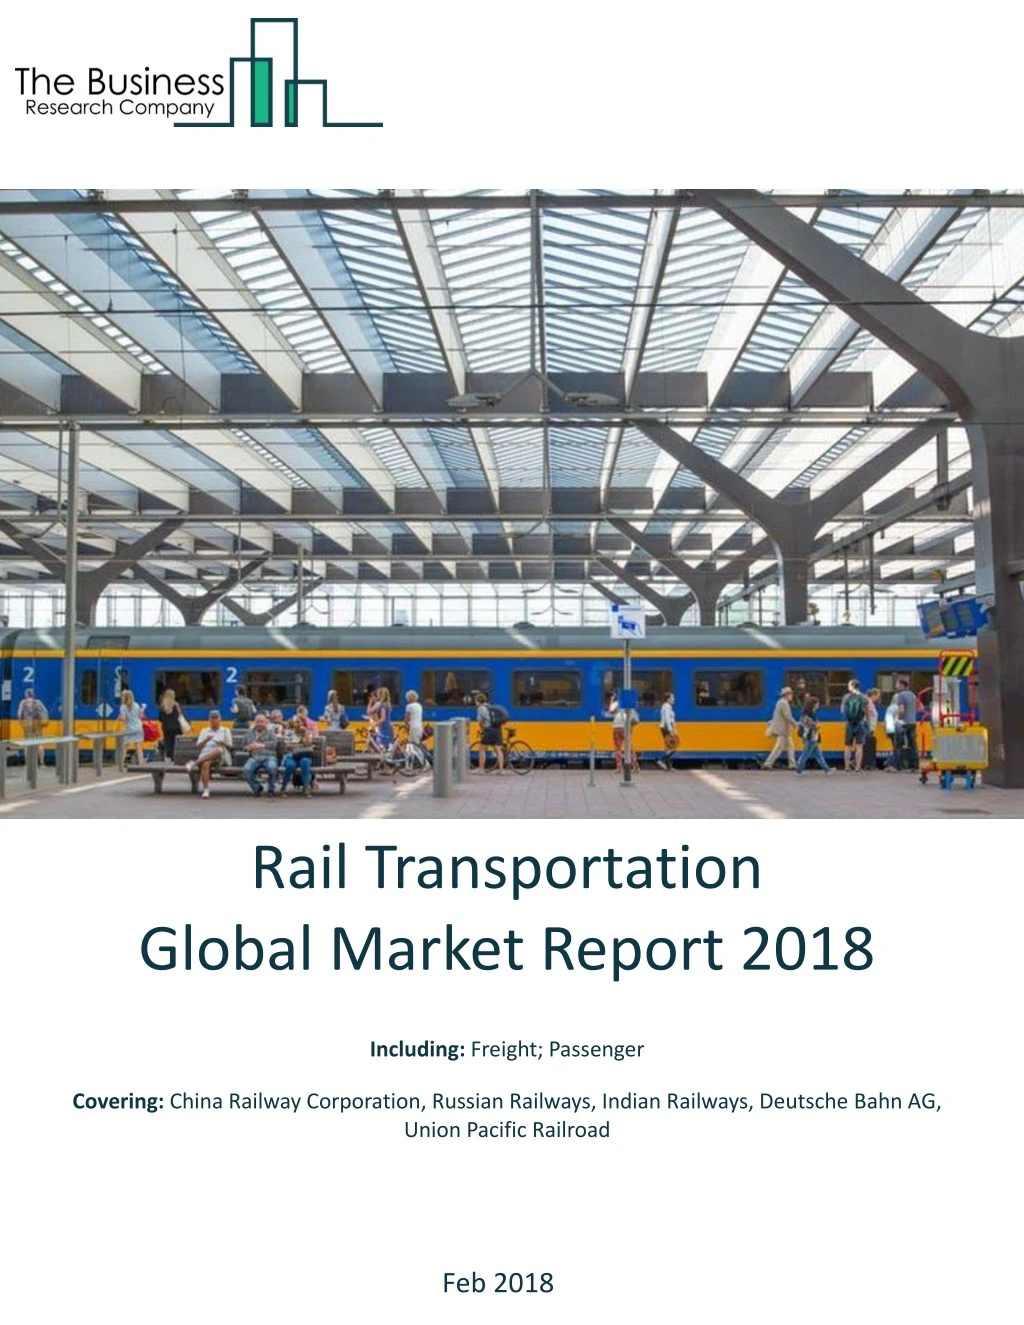 rail transportation global market report 2018